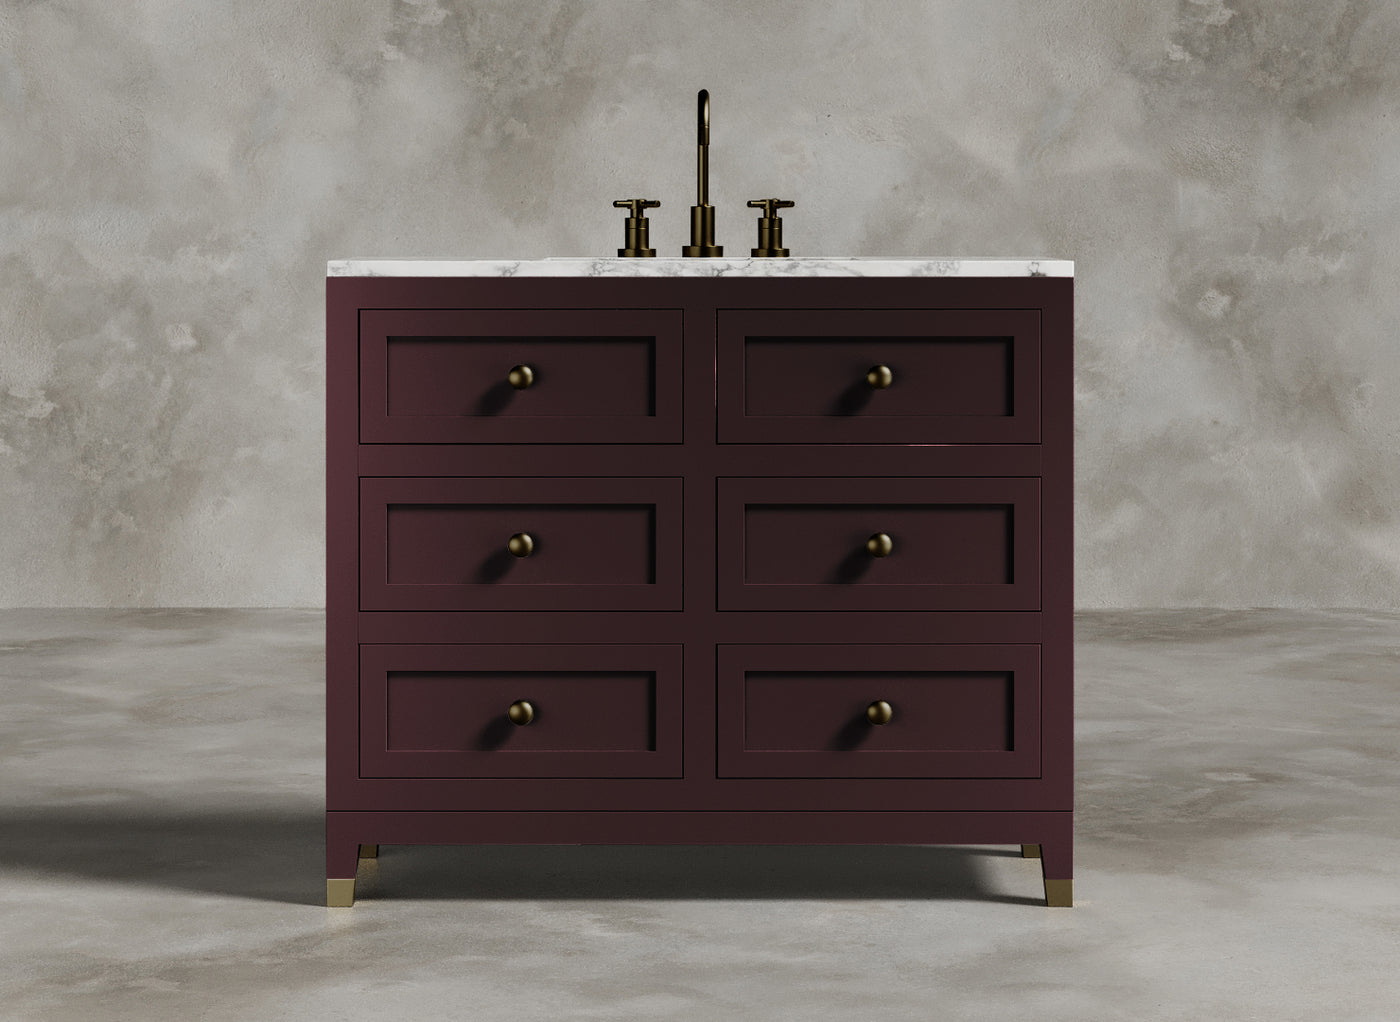 British Handmade Furniture I Bathroom Vanity I Merlot I Burgundy